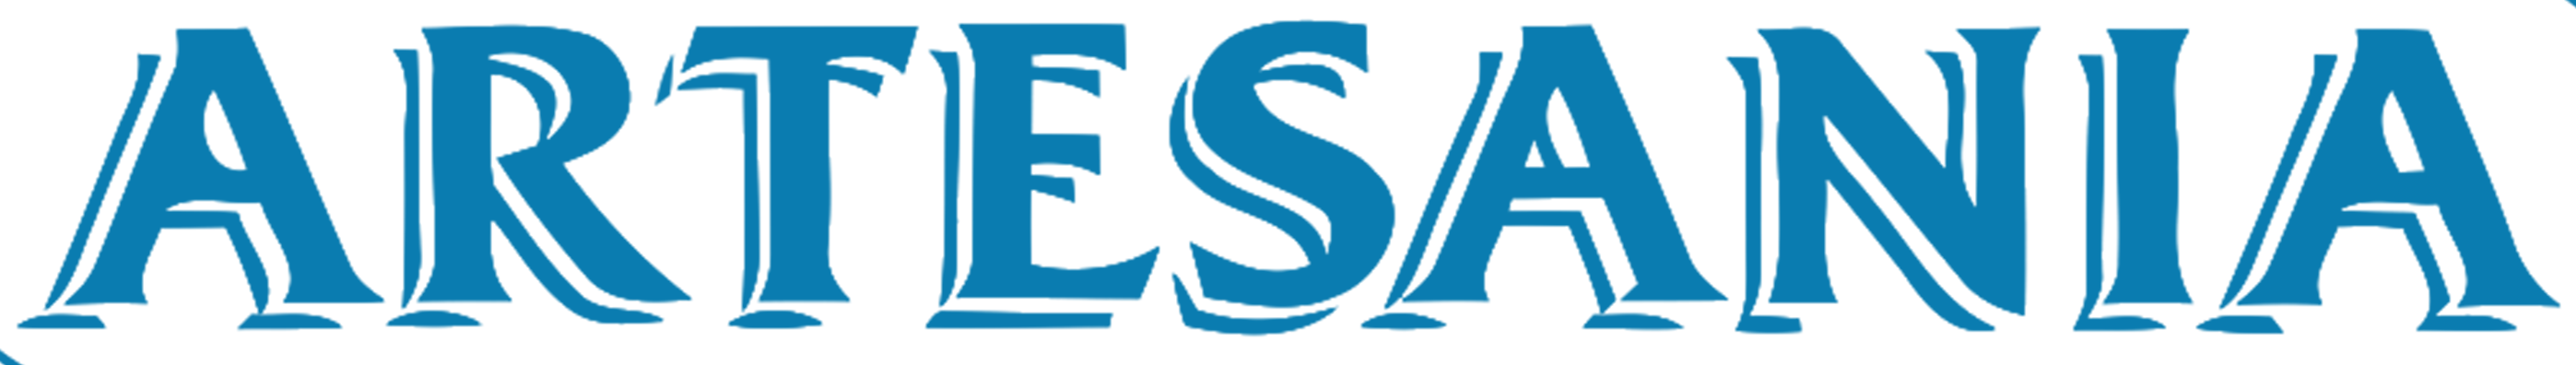 Artesania logo text